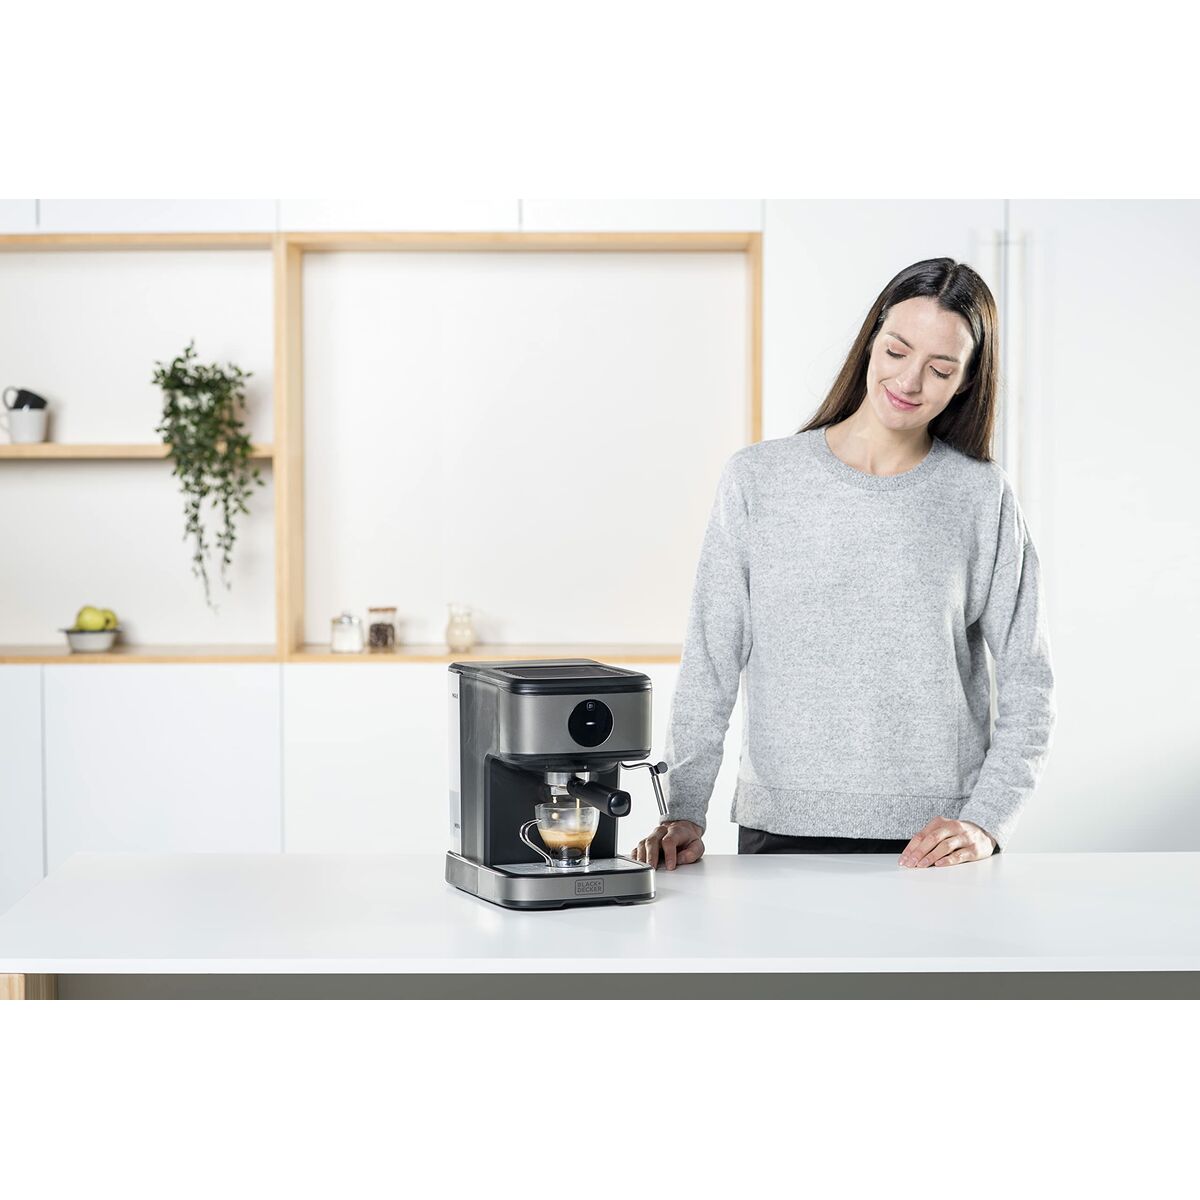 Superautomatische Kaffeemaschine Black & Decker BXCO850E Schwarz Silberfarben 850 W 20 bar 1,2 L 2 Kopper - CA International 